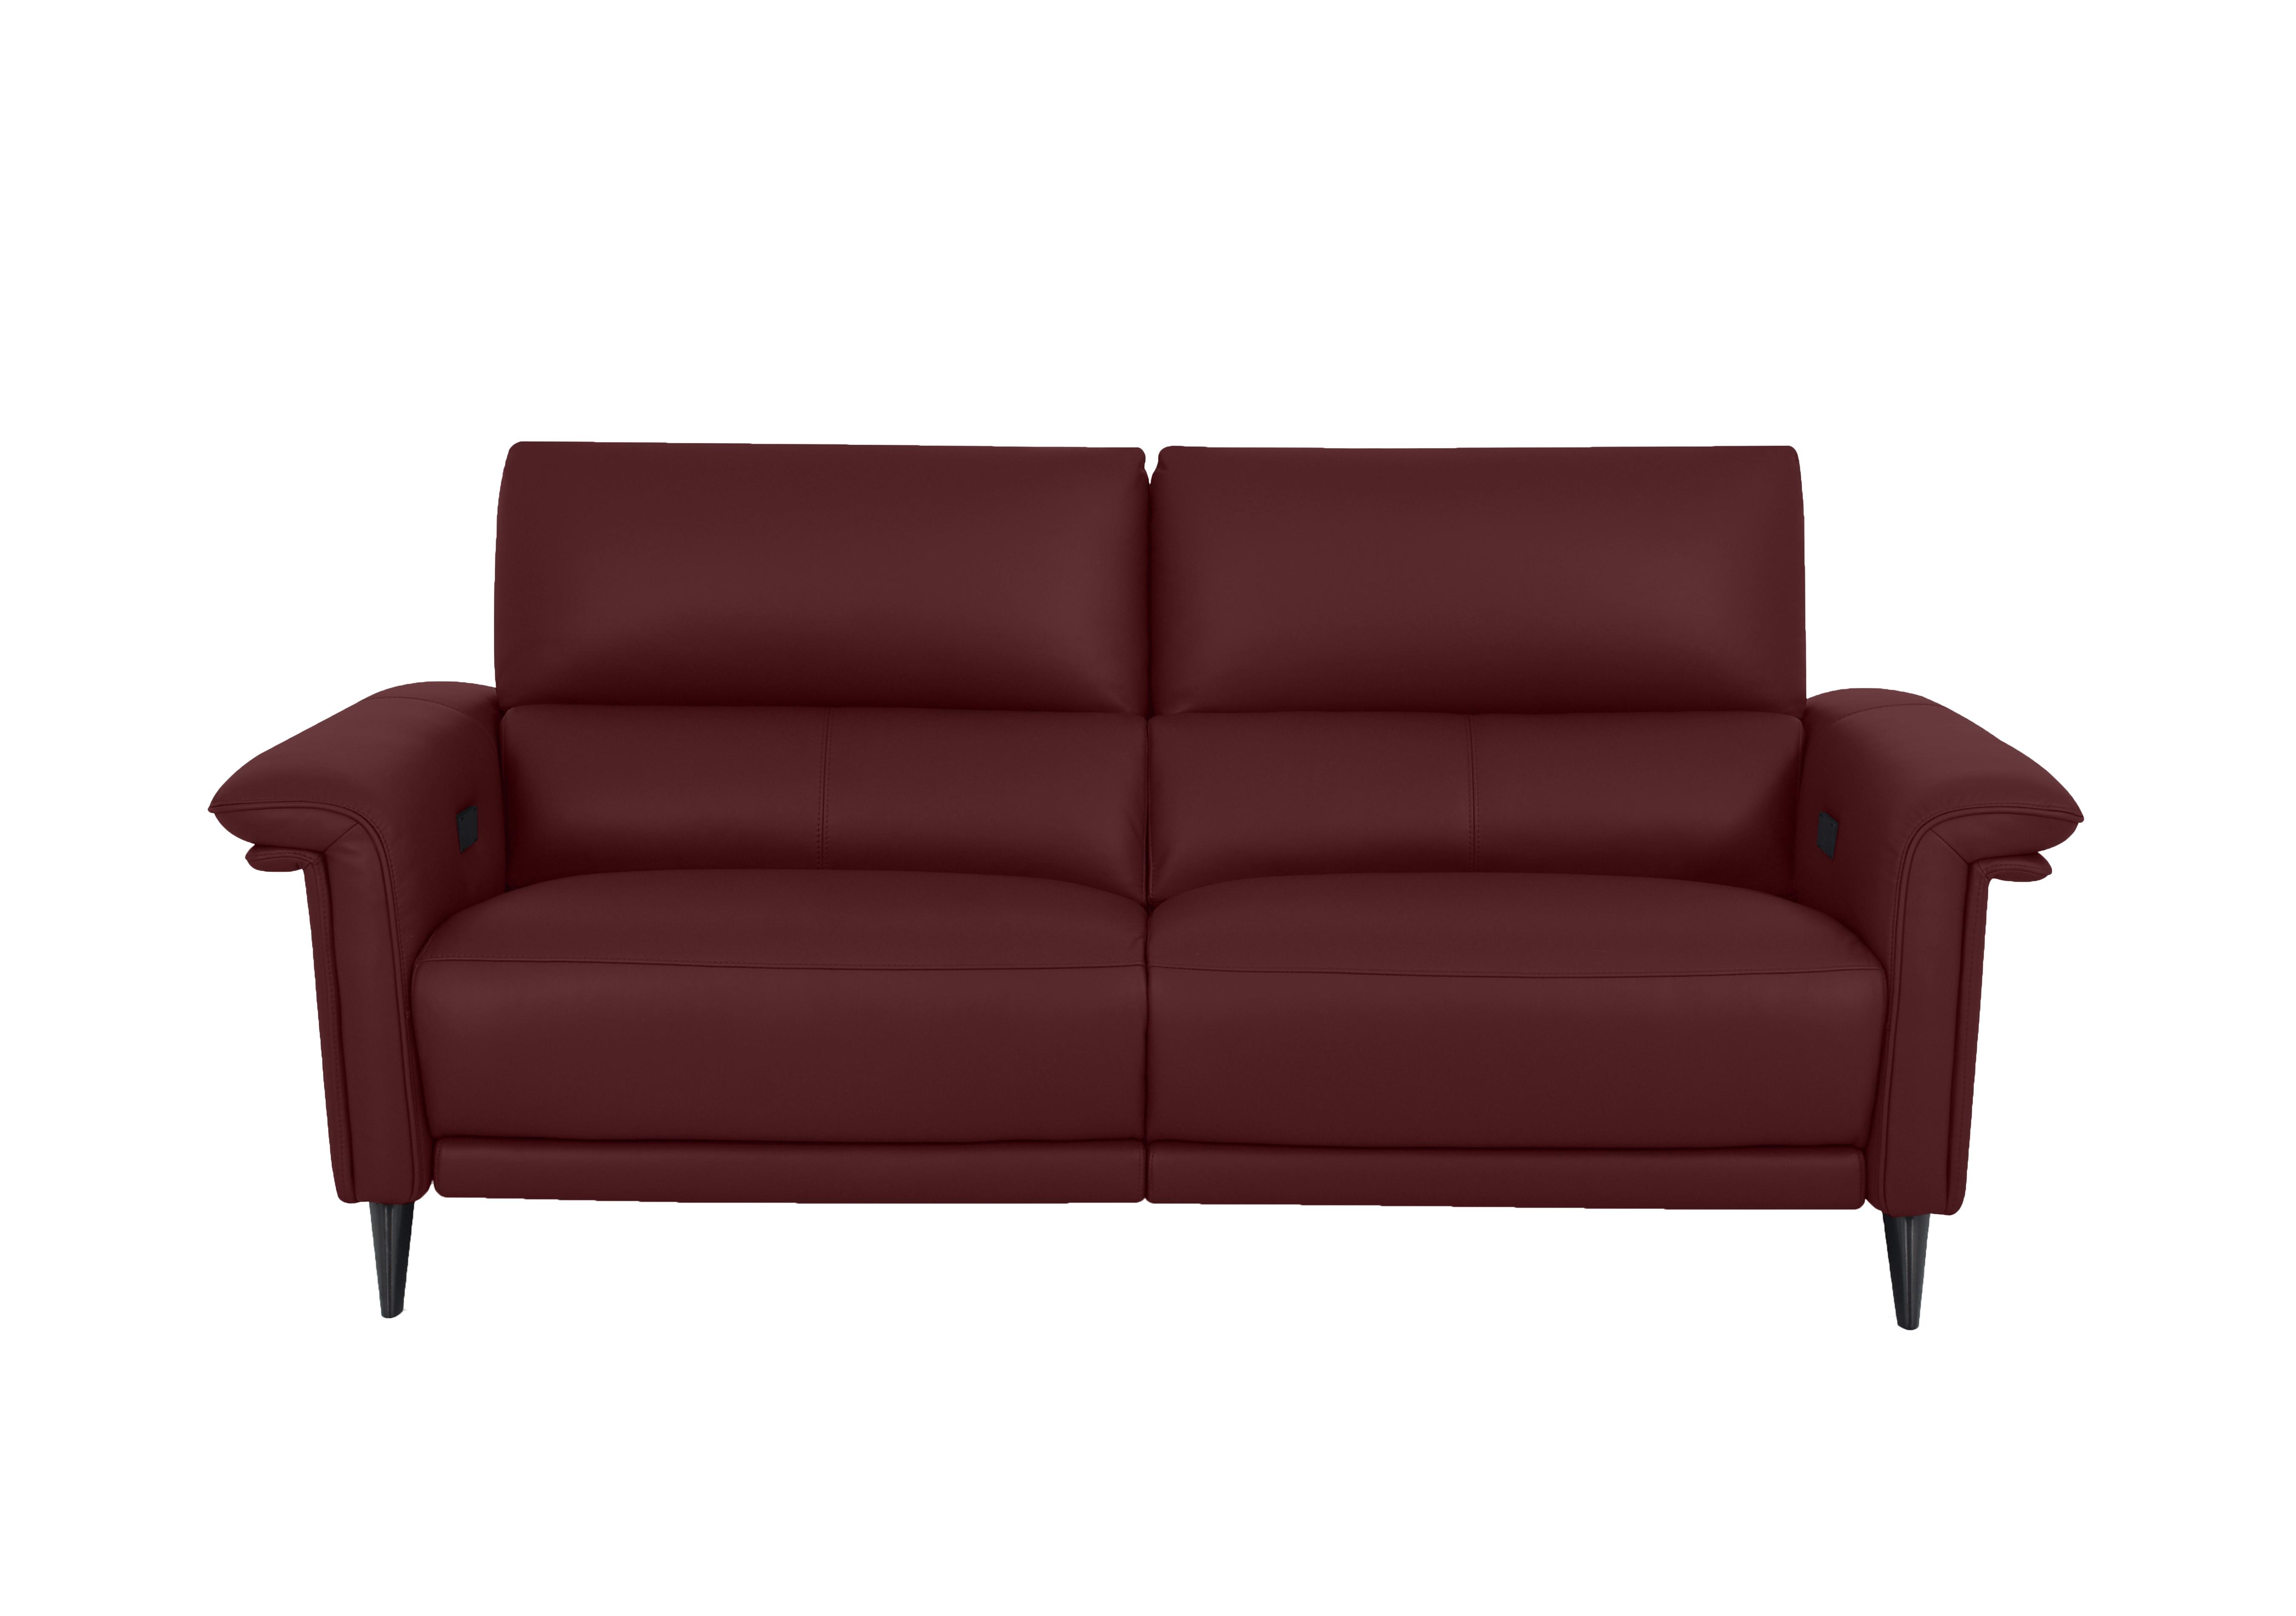 Huxley 3 Seater Leather Sofa in Nn-569e Burgundy on Furniture Village